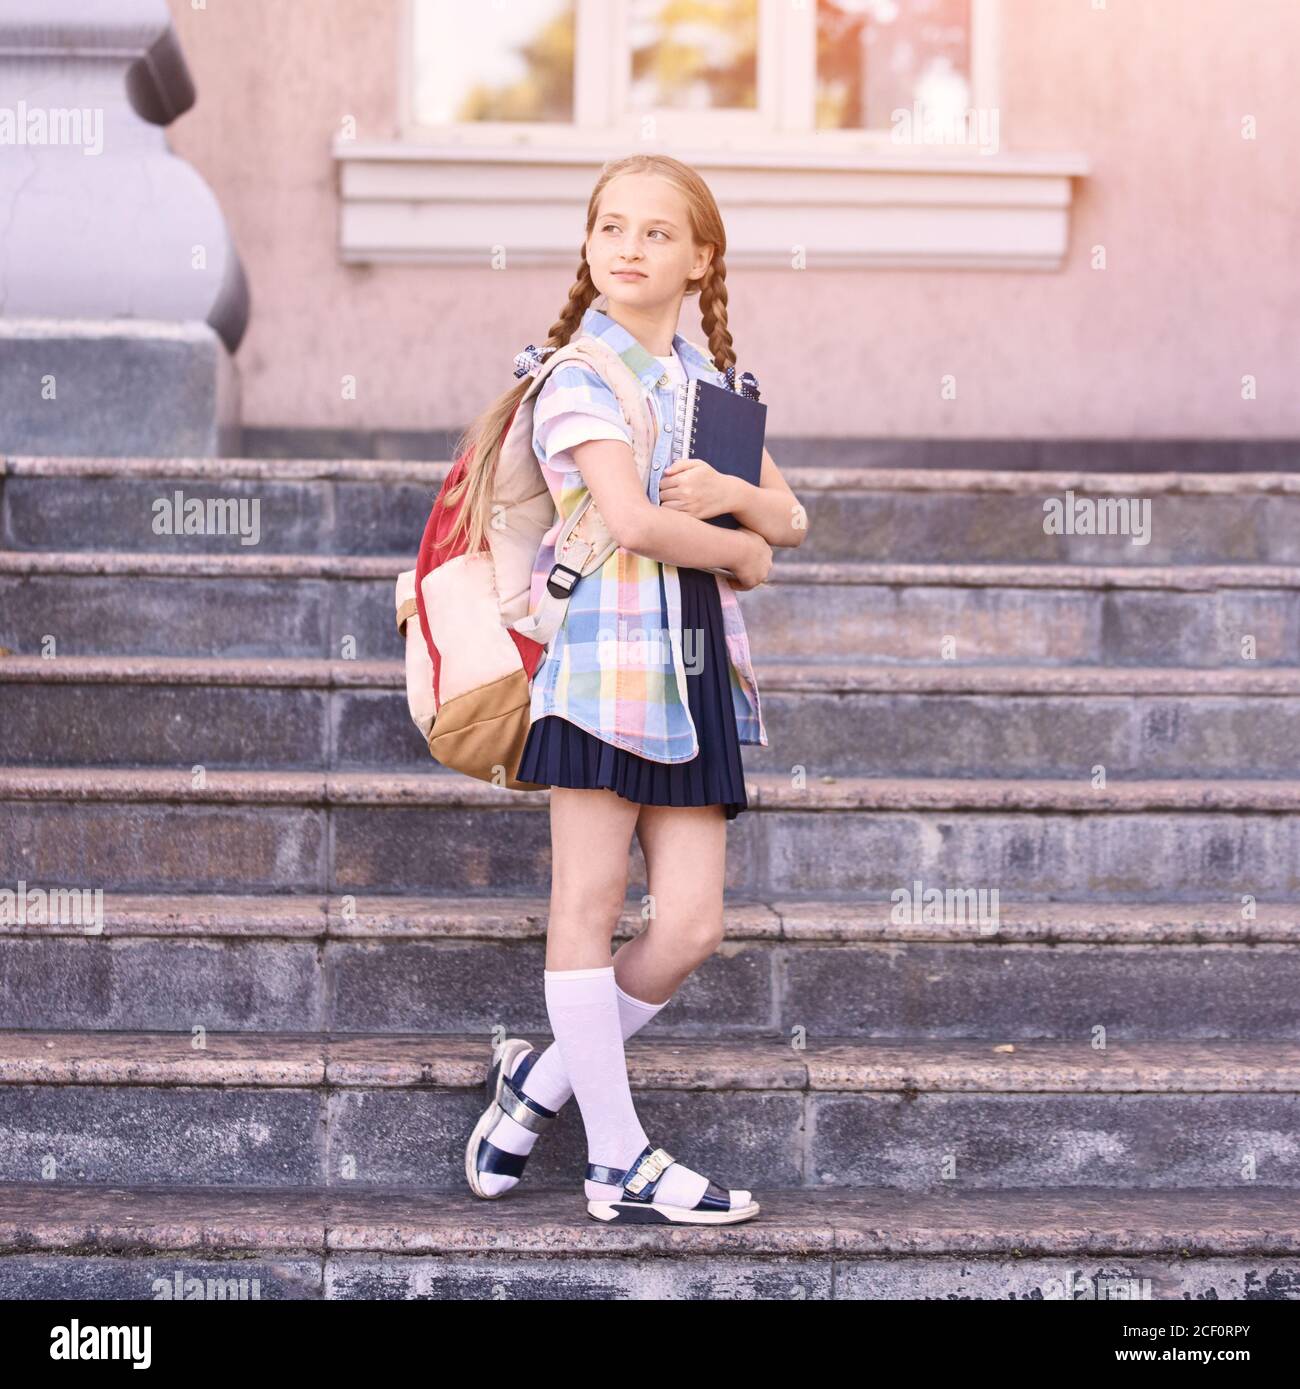 Young School Girl Pics